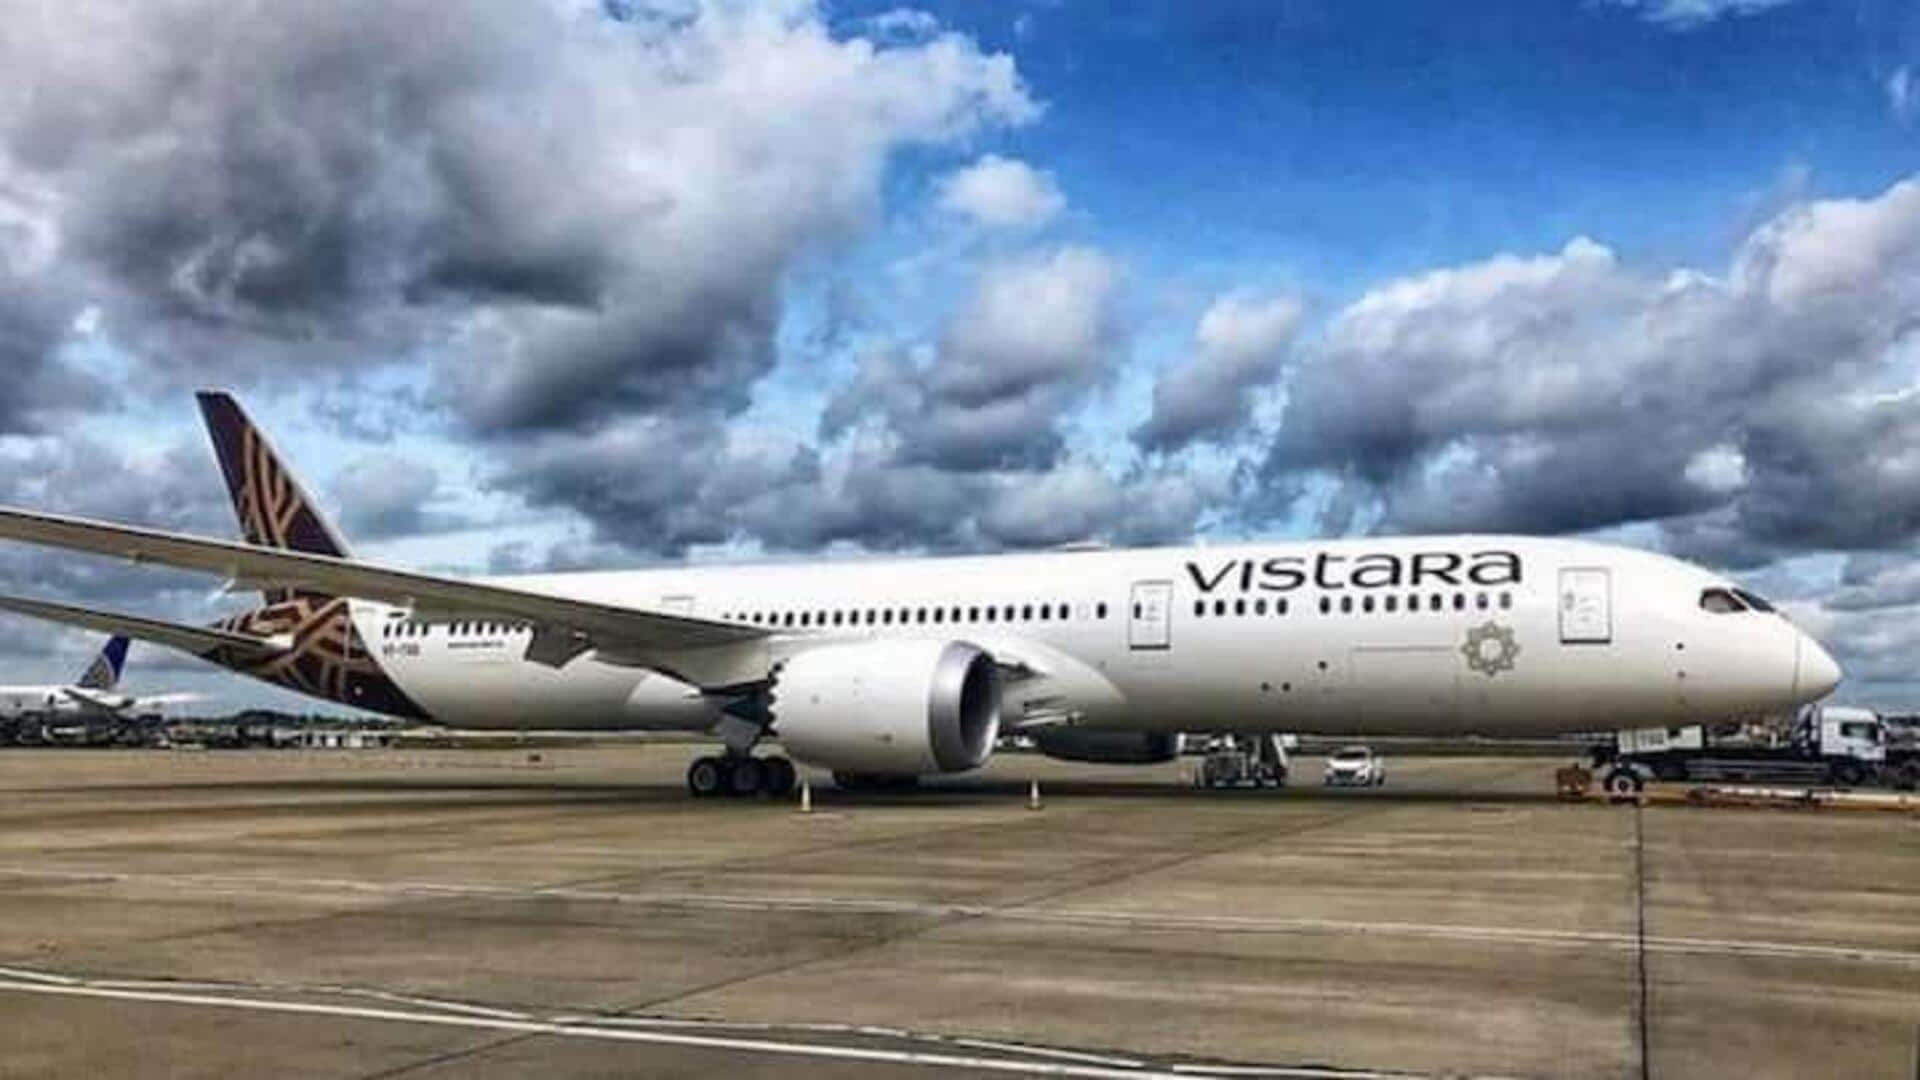 Bomb threat note found on Vistara flight from Paris